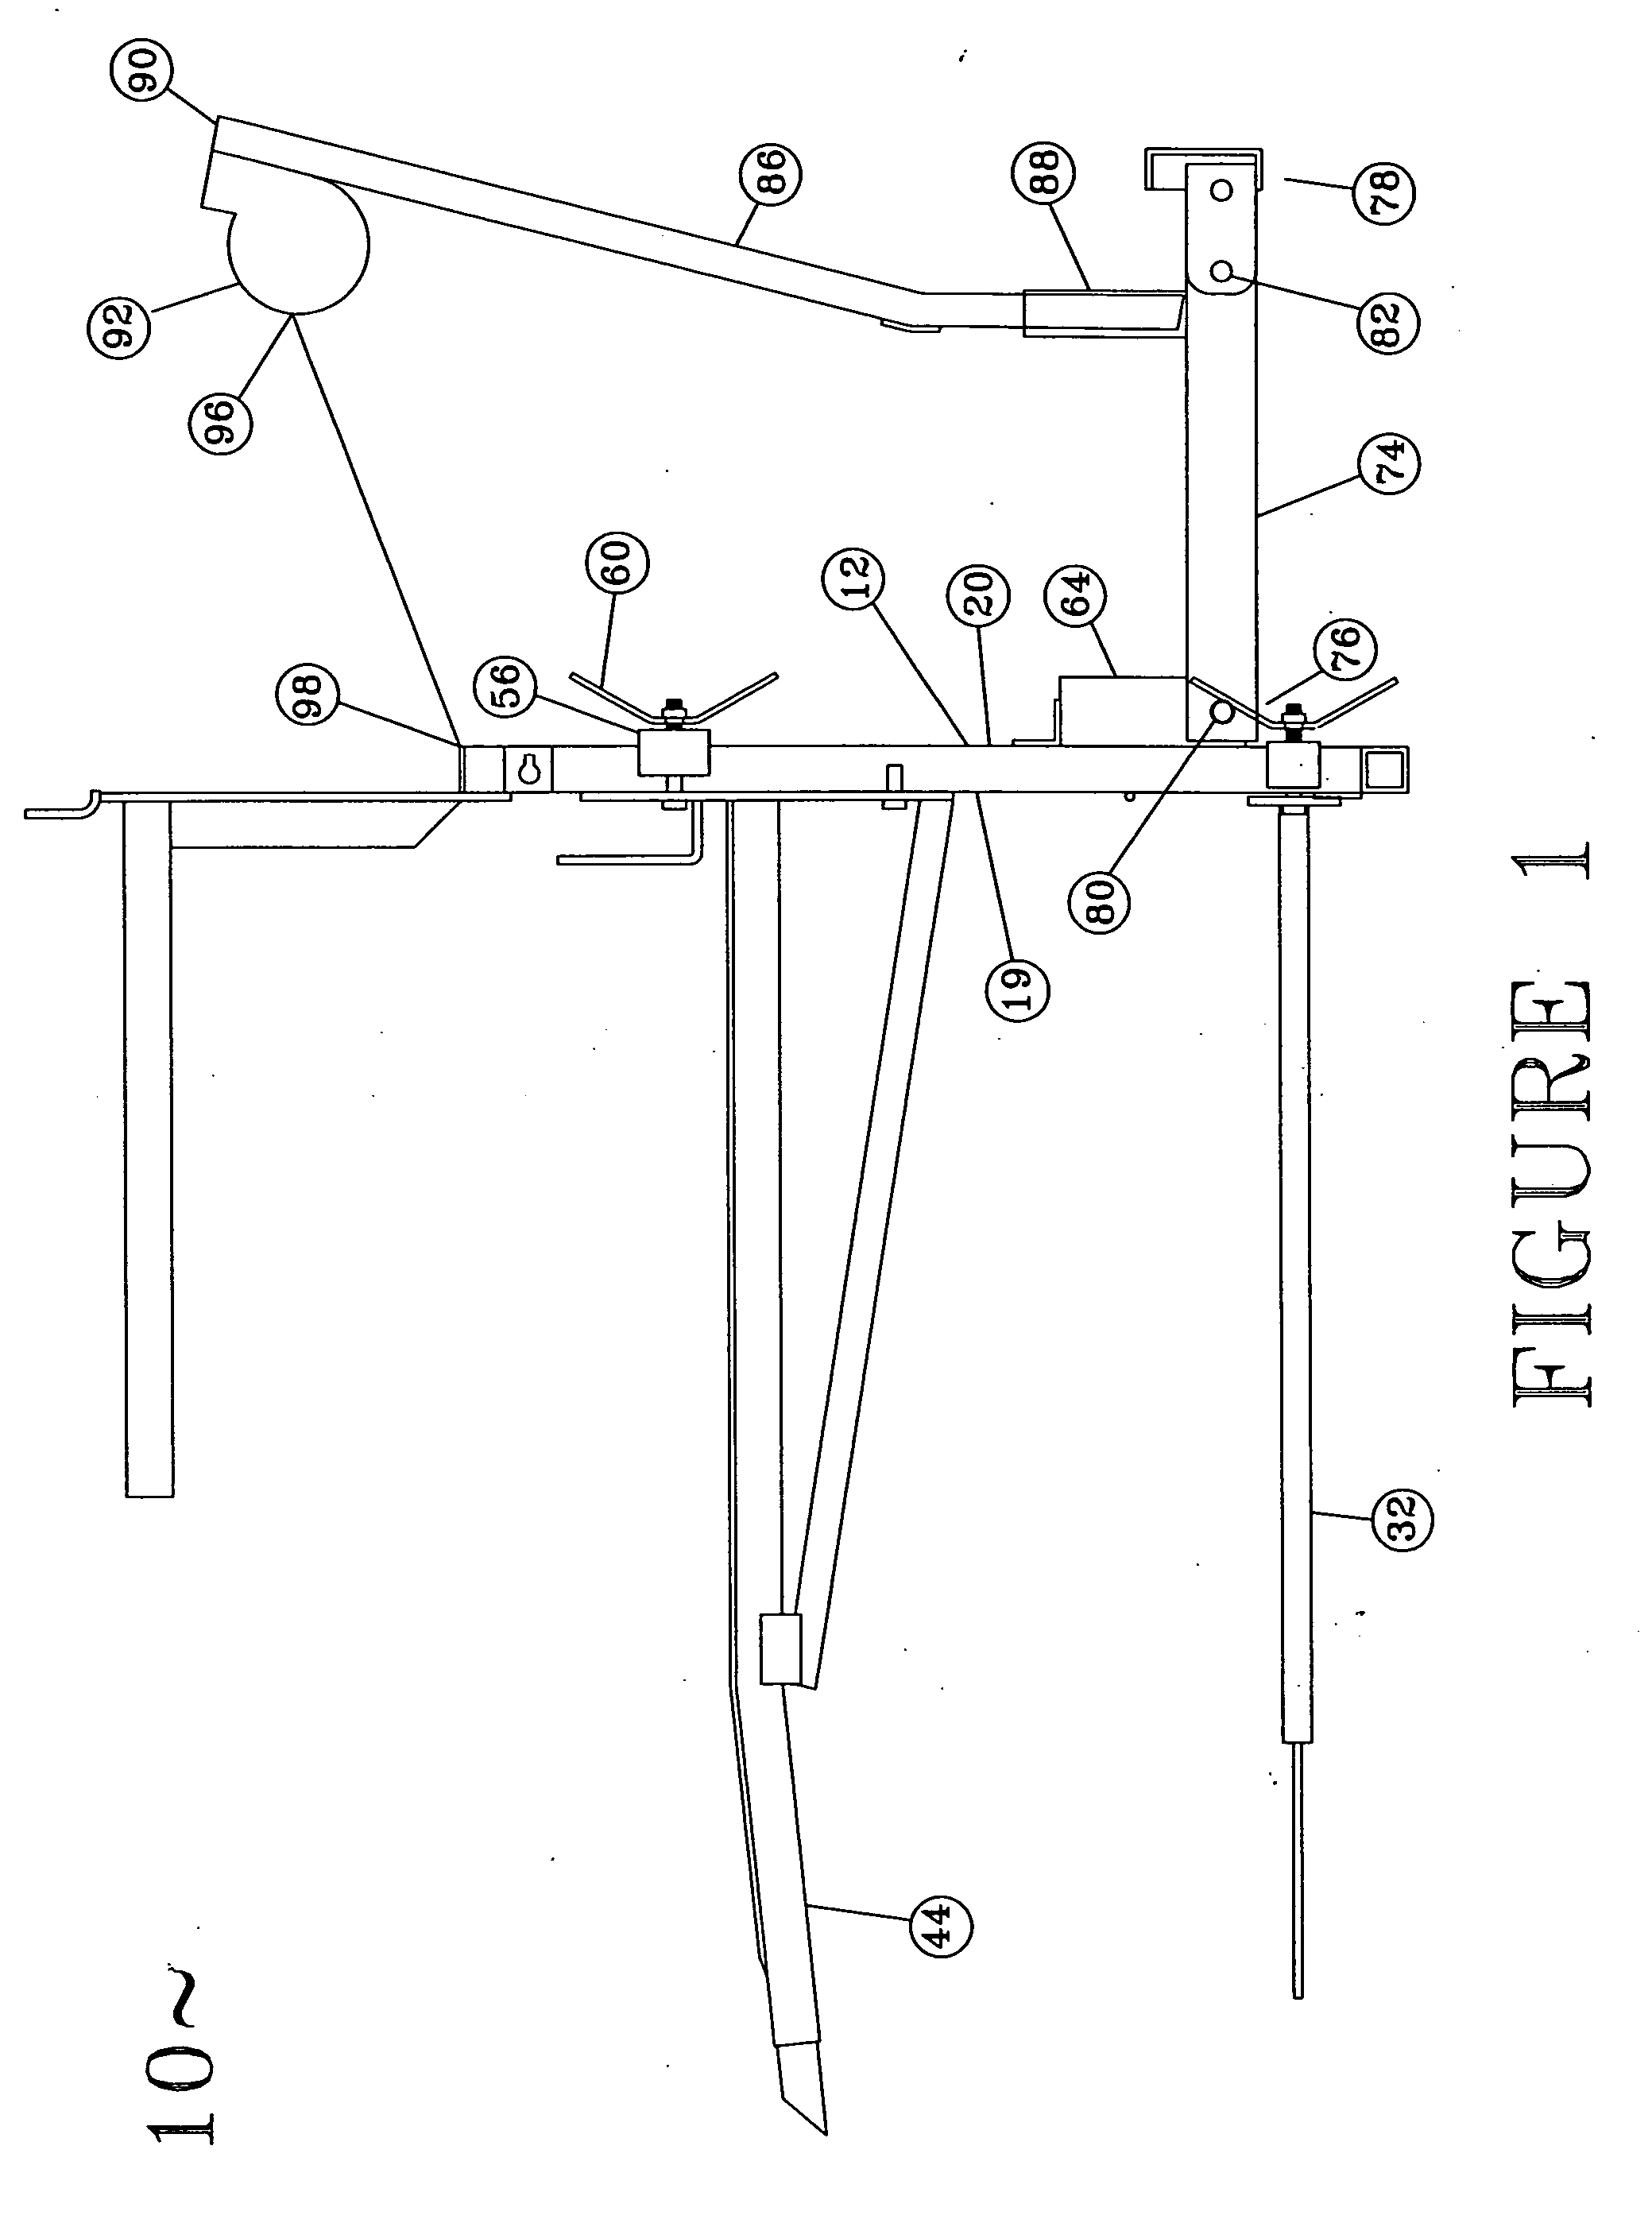 Razor wire dispensing and retrieving apparatus